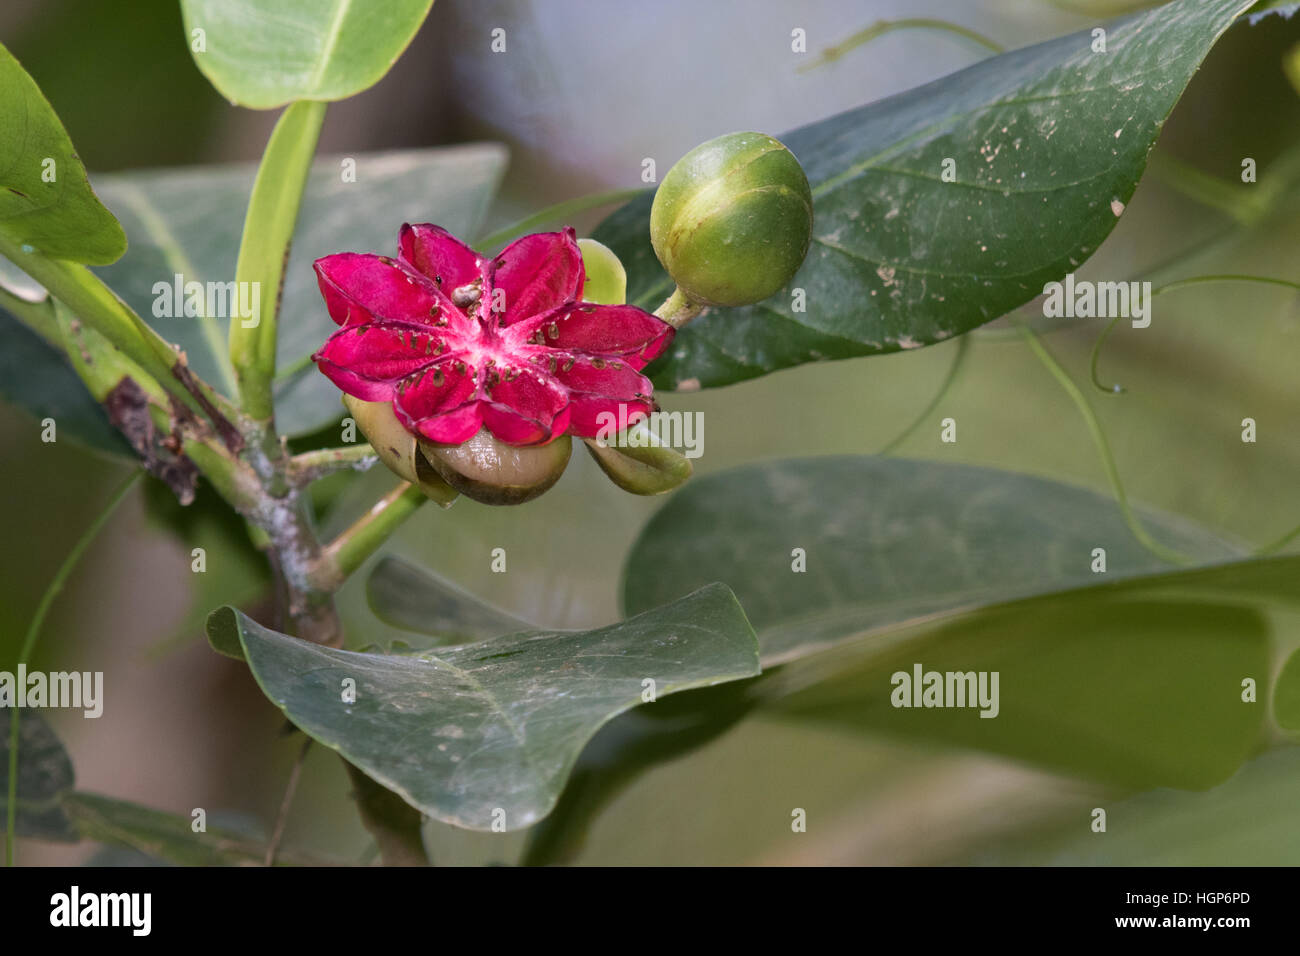 open, flower-like fruit of Dillenia alata (Red Beech or Golden Guinea Tree) Stock Photo